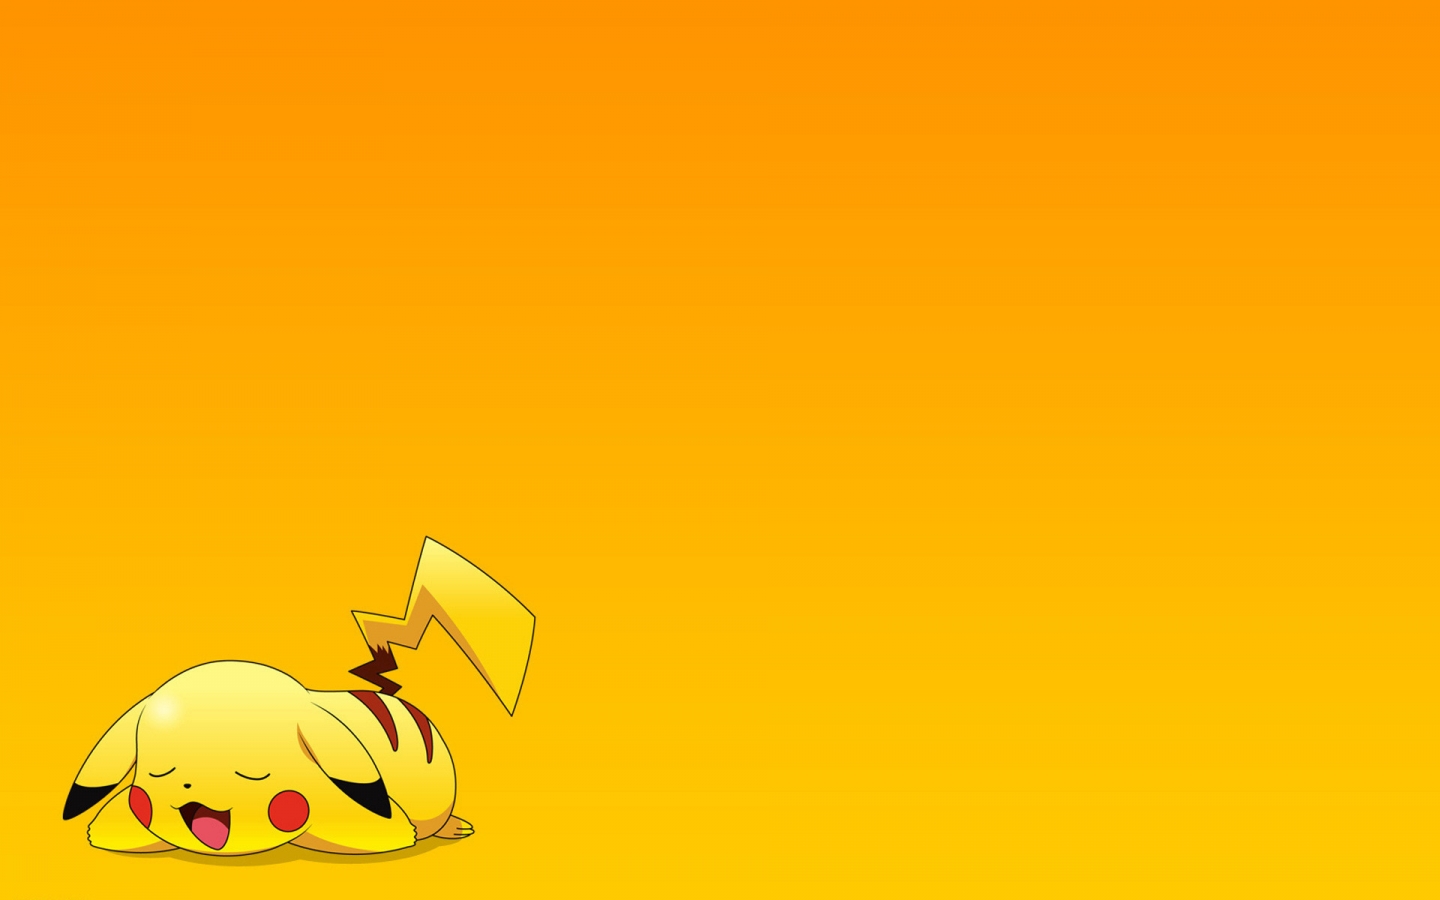 Pikachu for 1440 x 900 widescreen resolution